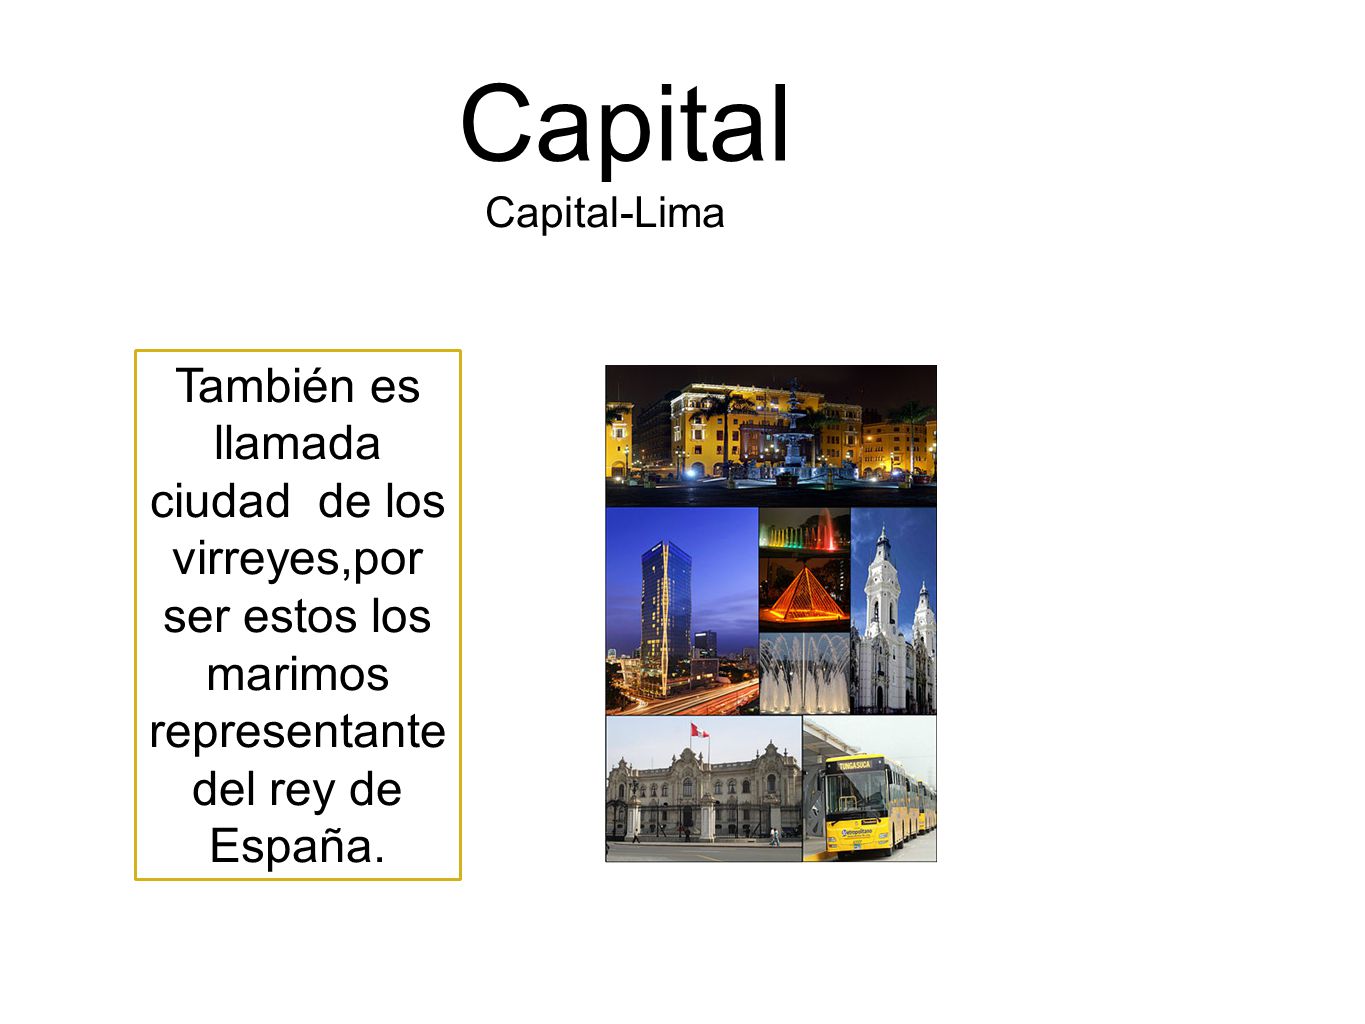 Capital Capital-Lima.